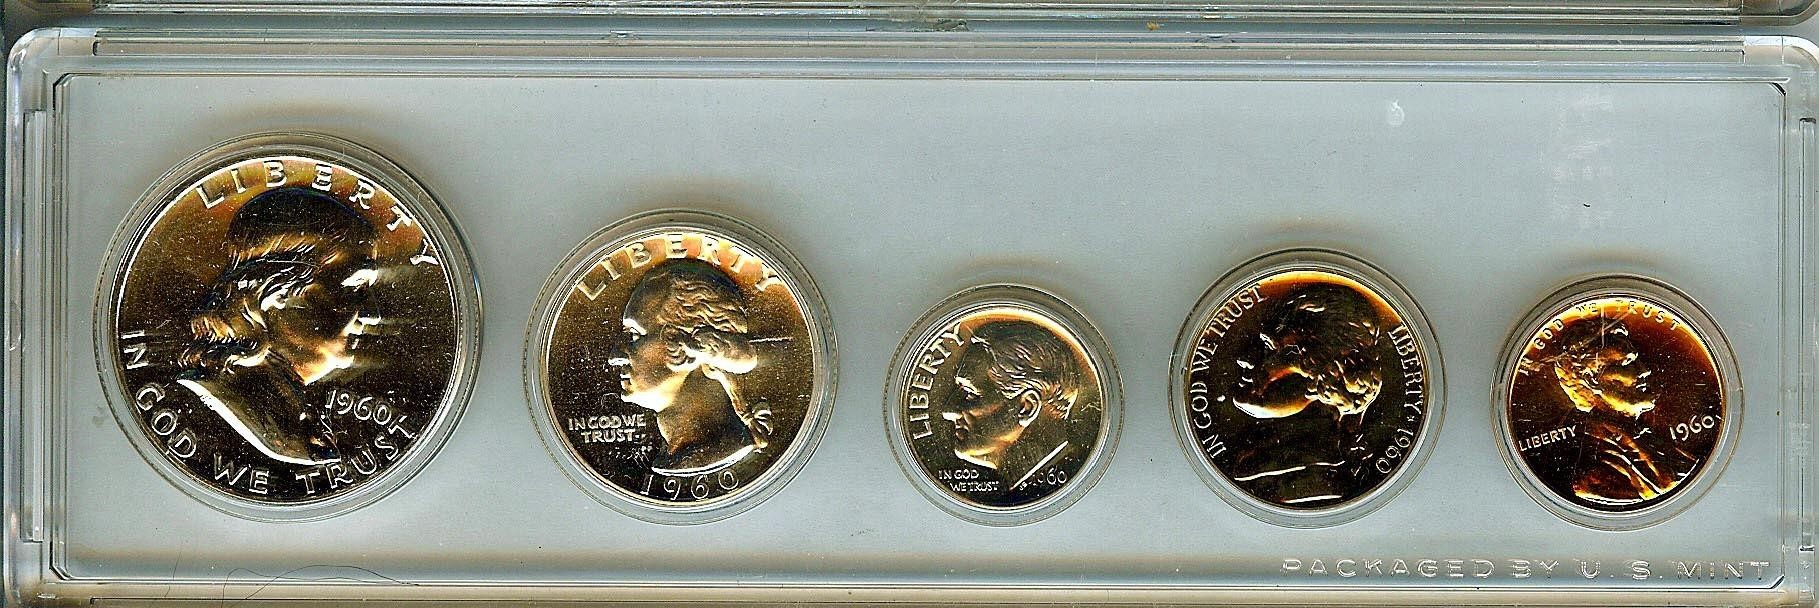 1960 Silver U.S. Proof Set In Display Case